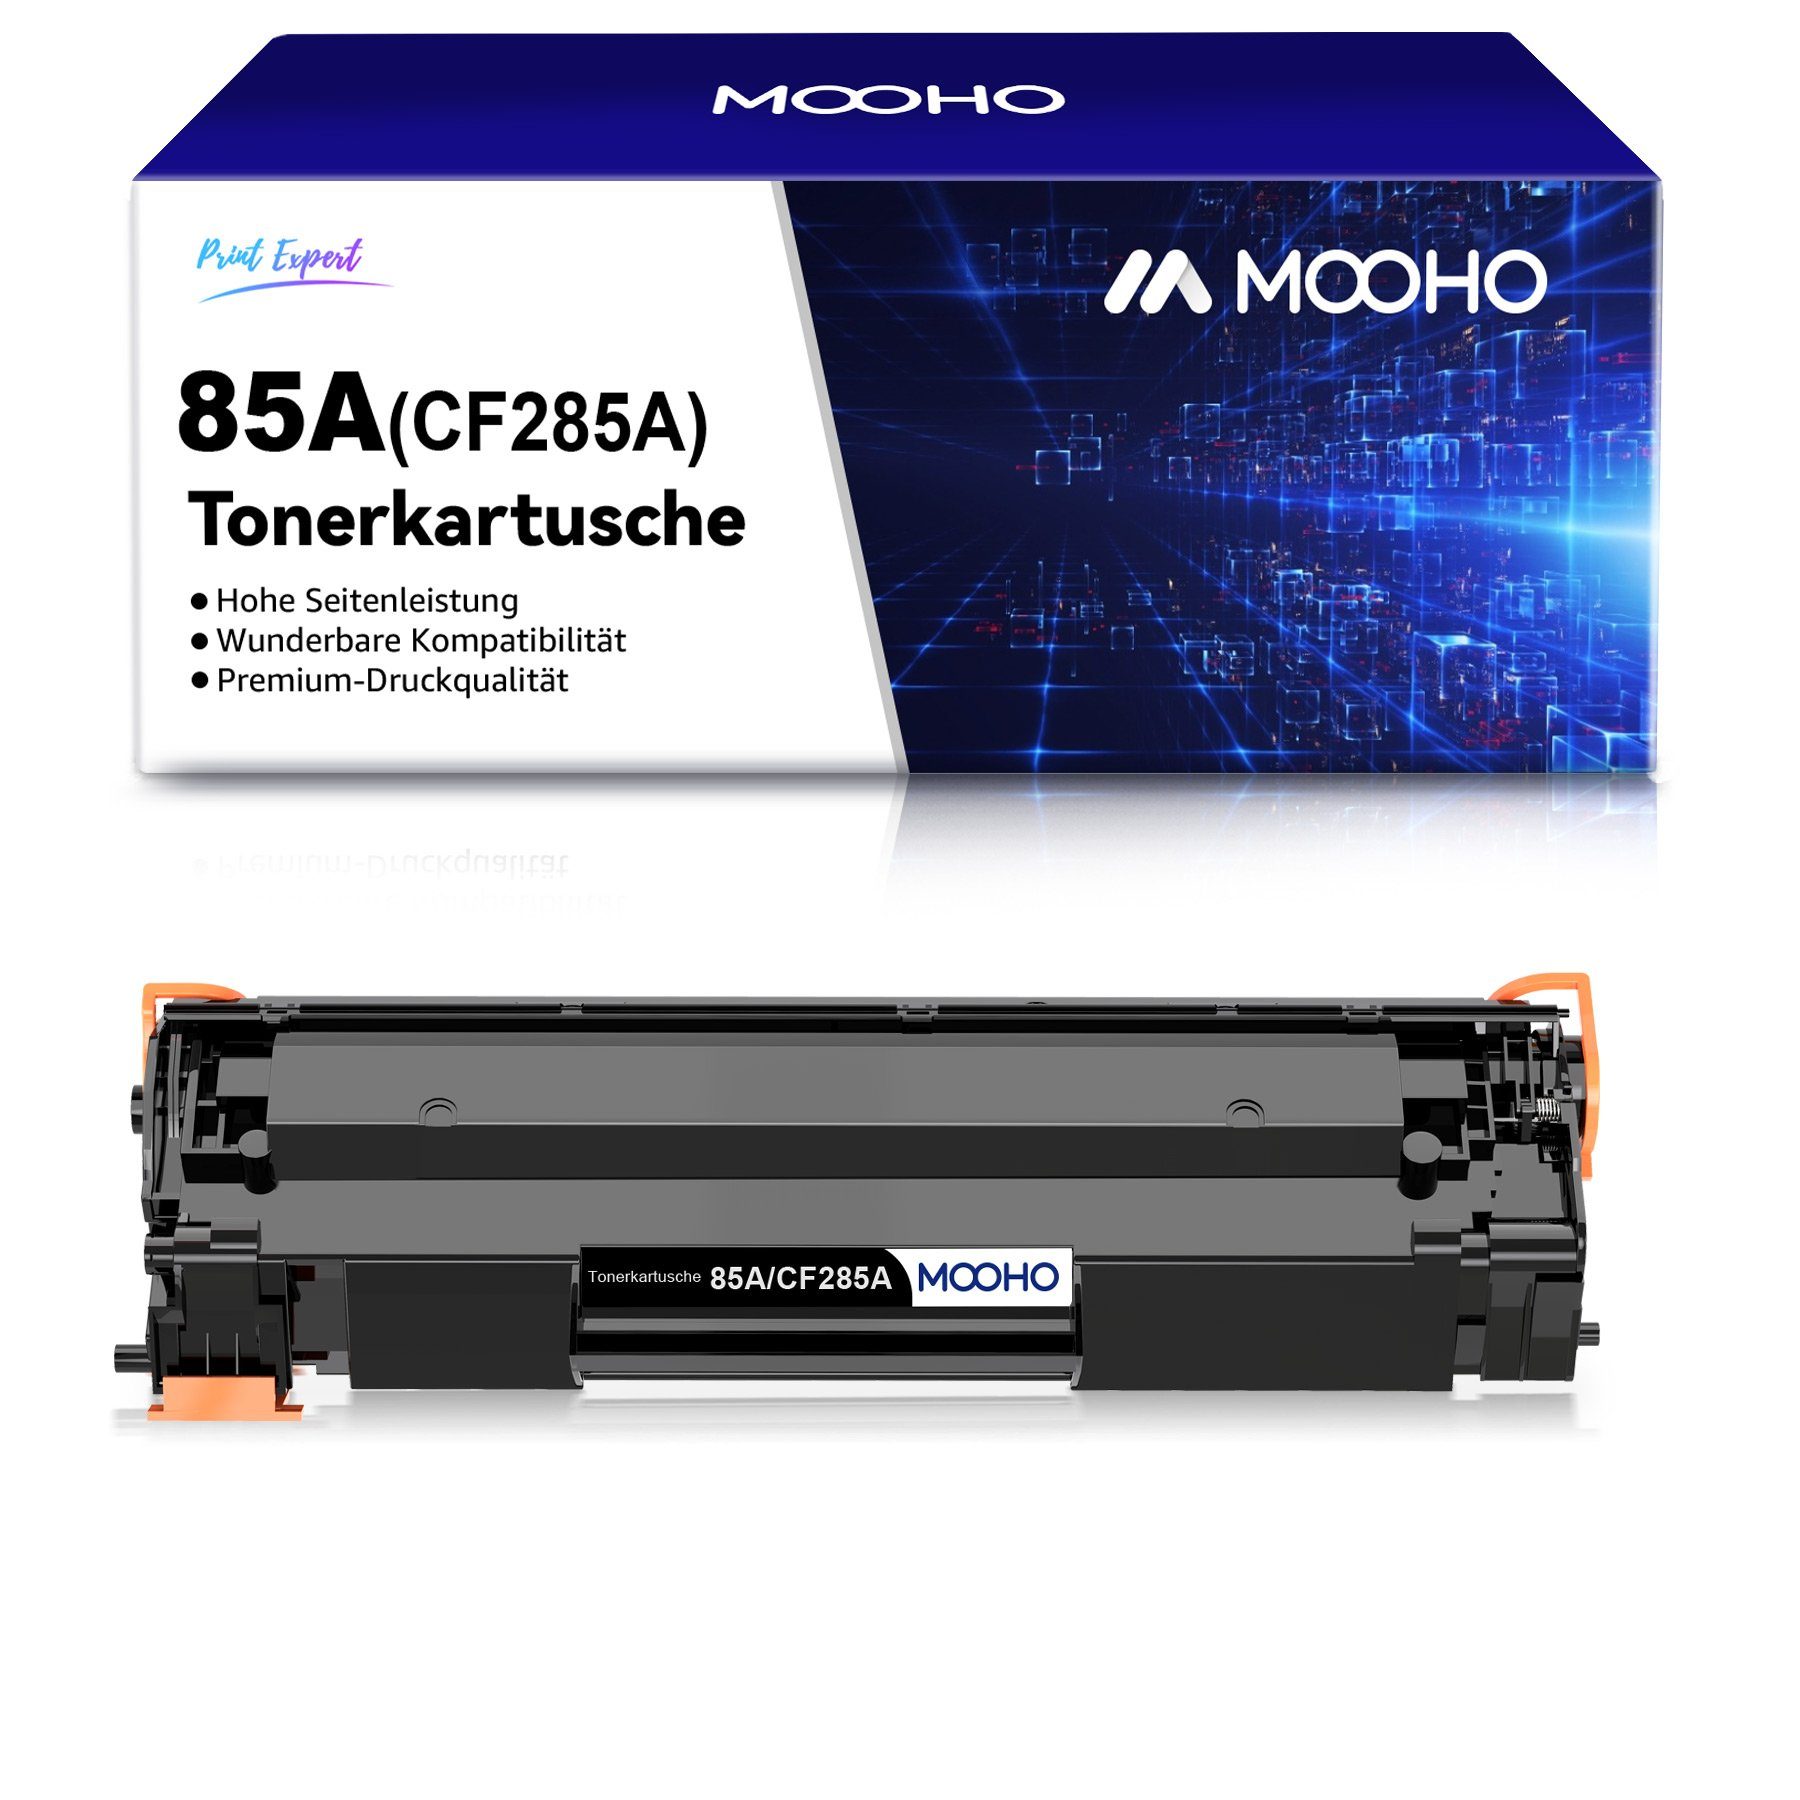 MOOHO Tonerkartusche für HP CE285A 85A 285A Laserjet Pro P1102W P1102 P1005 M1212nf toner, (schwarz)